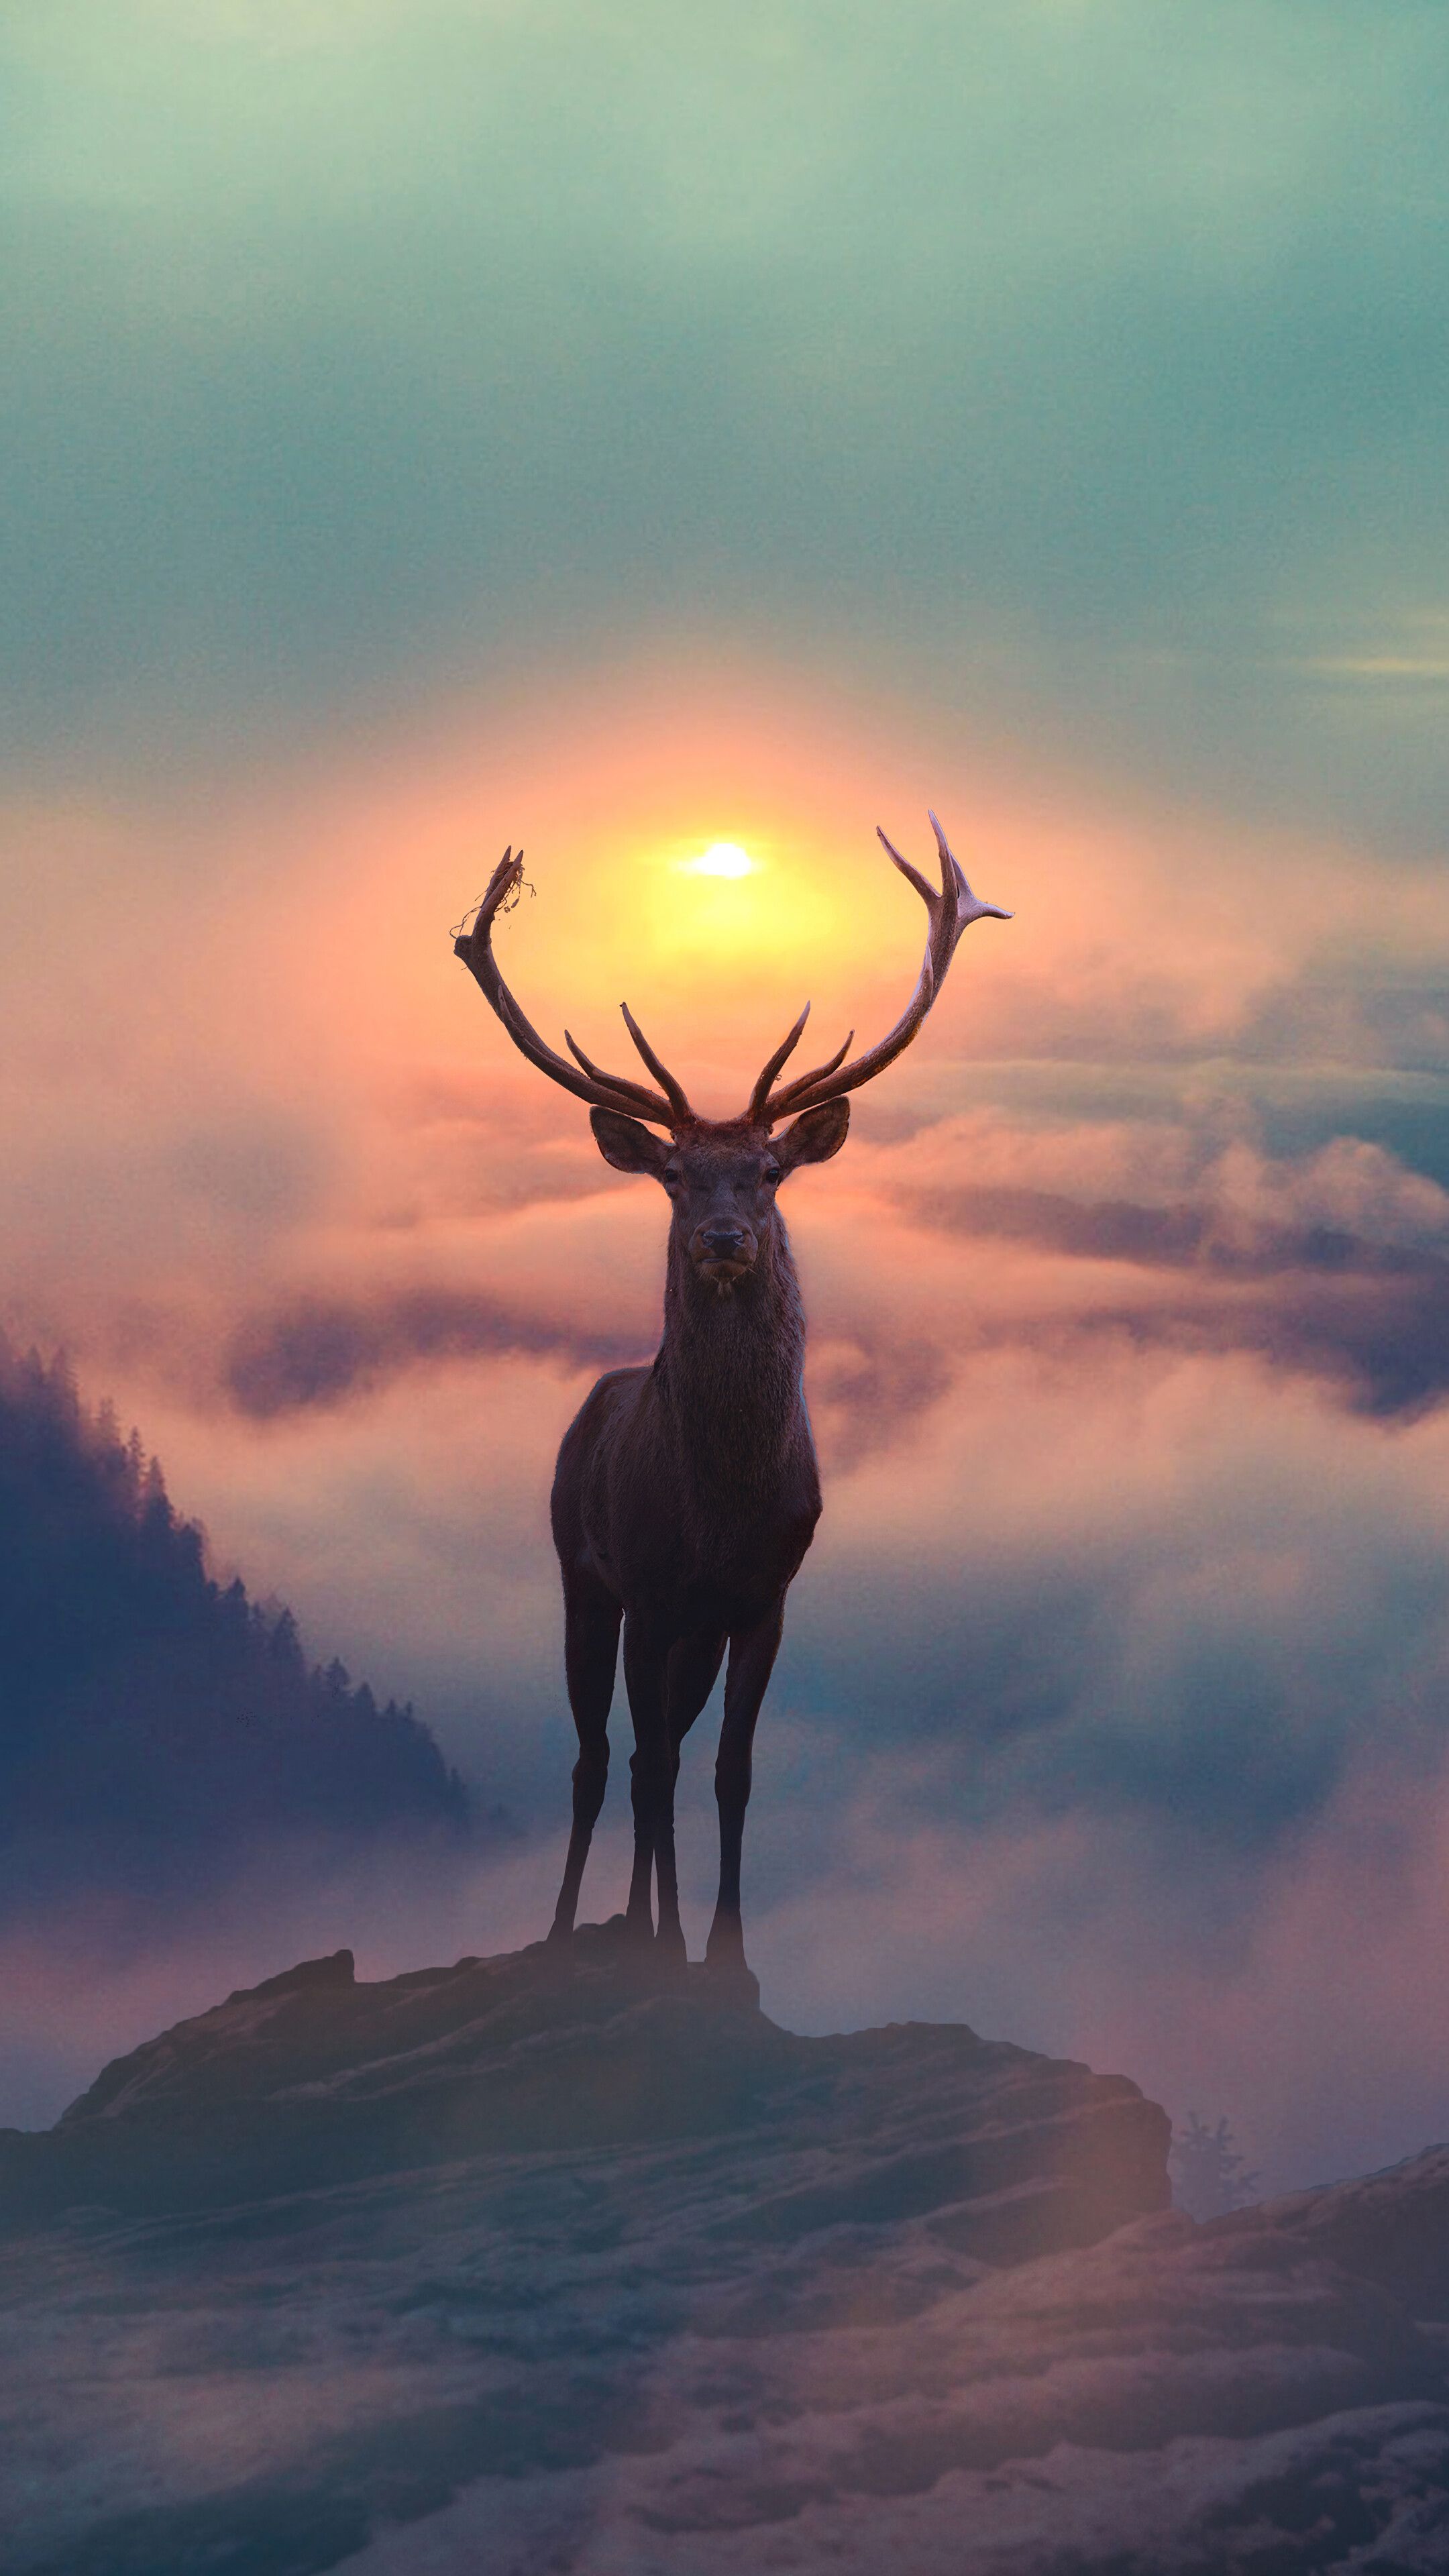 A deer standing on top of the mountain - Deer